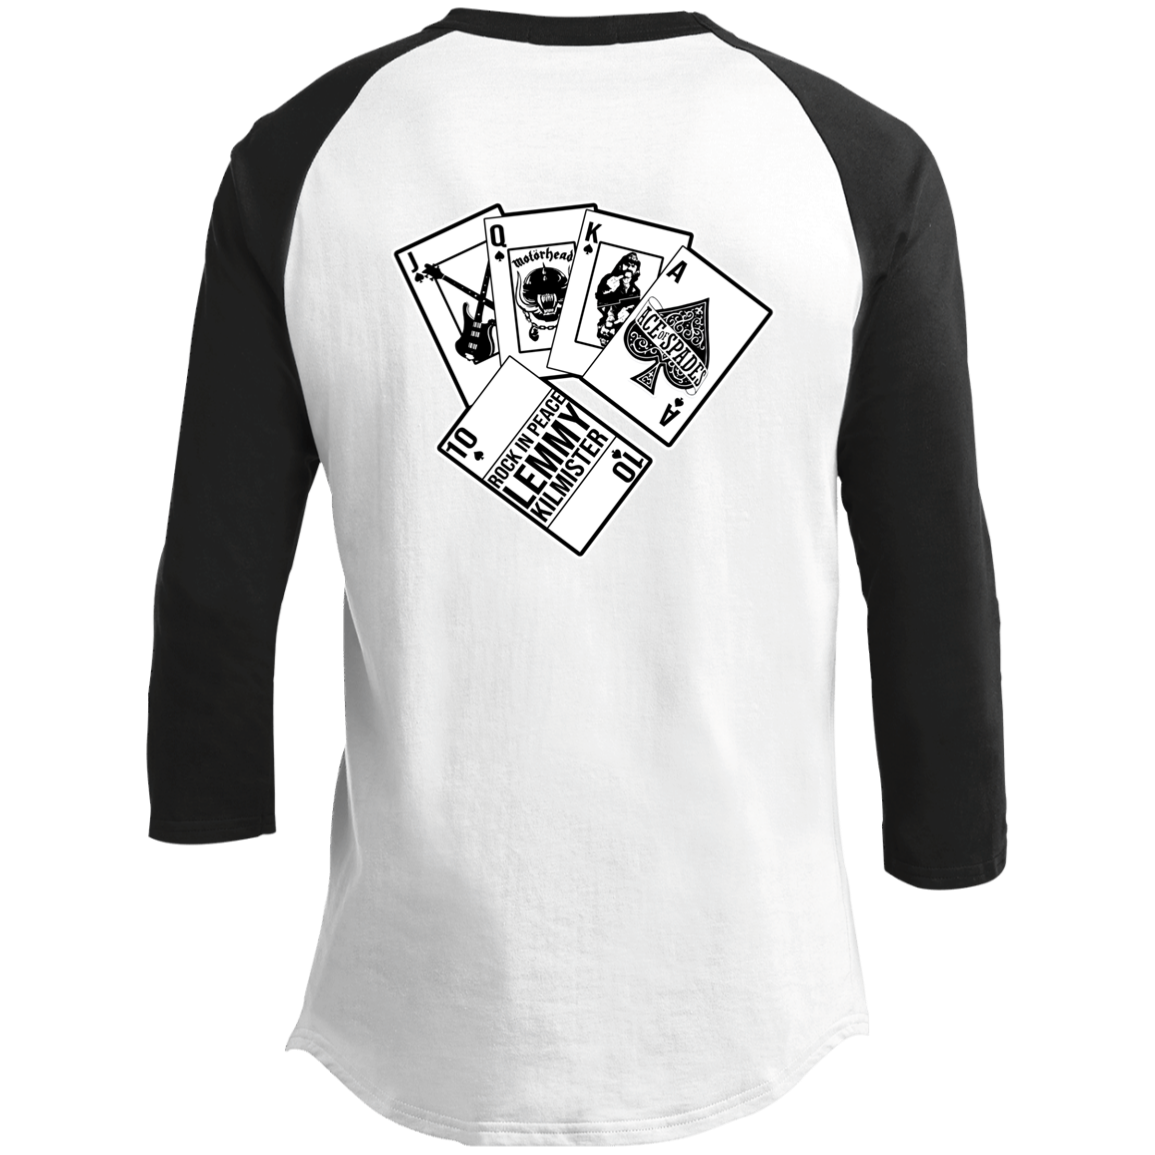 ArtichokeUSA Custom Design. Motorhead's Lemmy Kilmister's Favorite Video Poker Machine. Rock in Peace! Youth 3/4 Raglan Sleeve Shirt